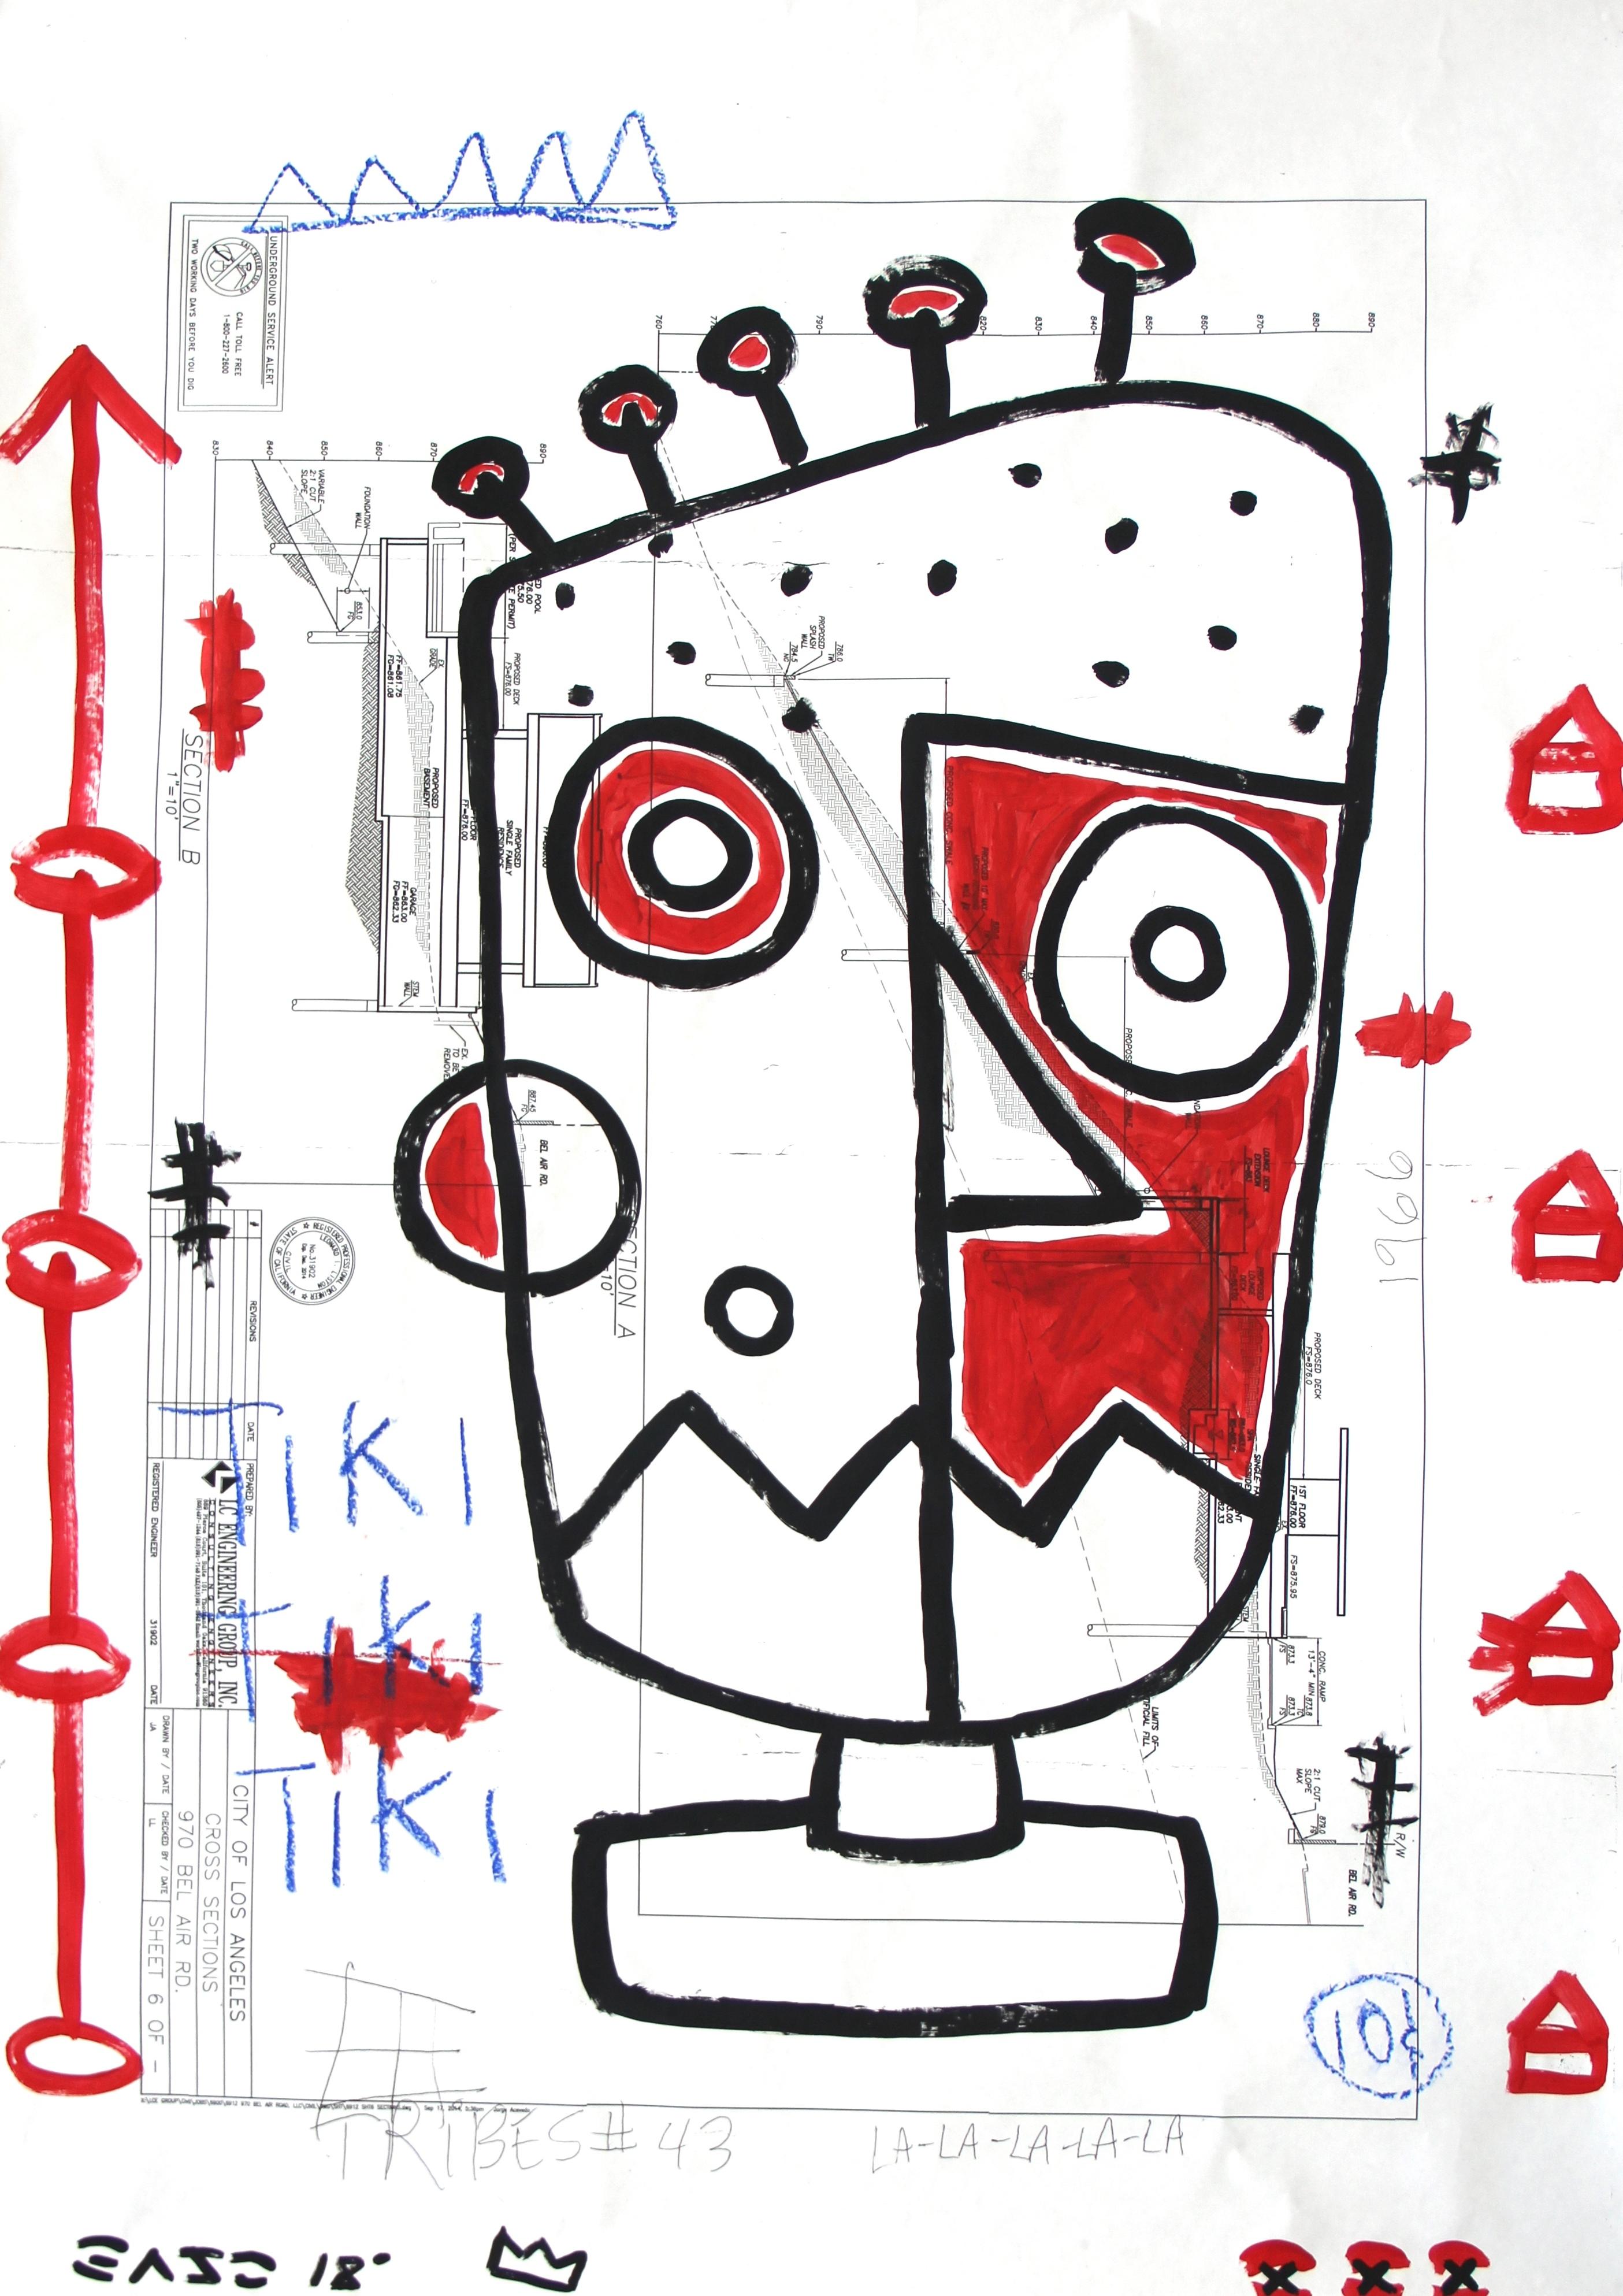 "Robot Tiki Man" - Original Red and Black Pop Street Art by Gary John